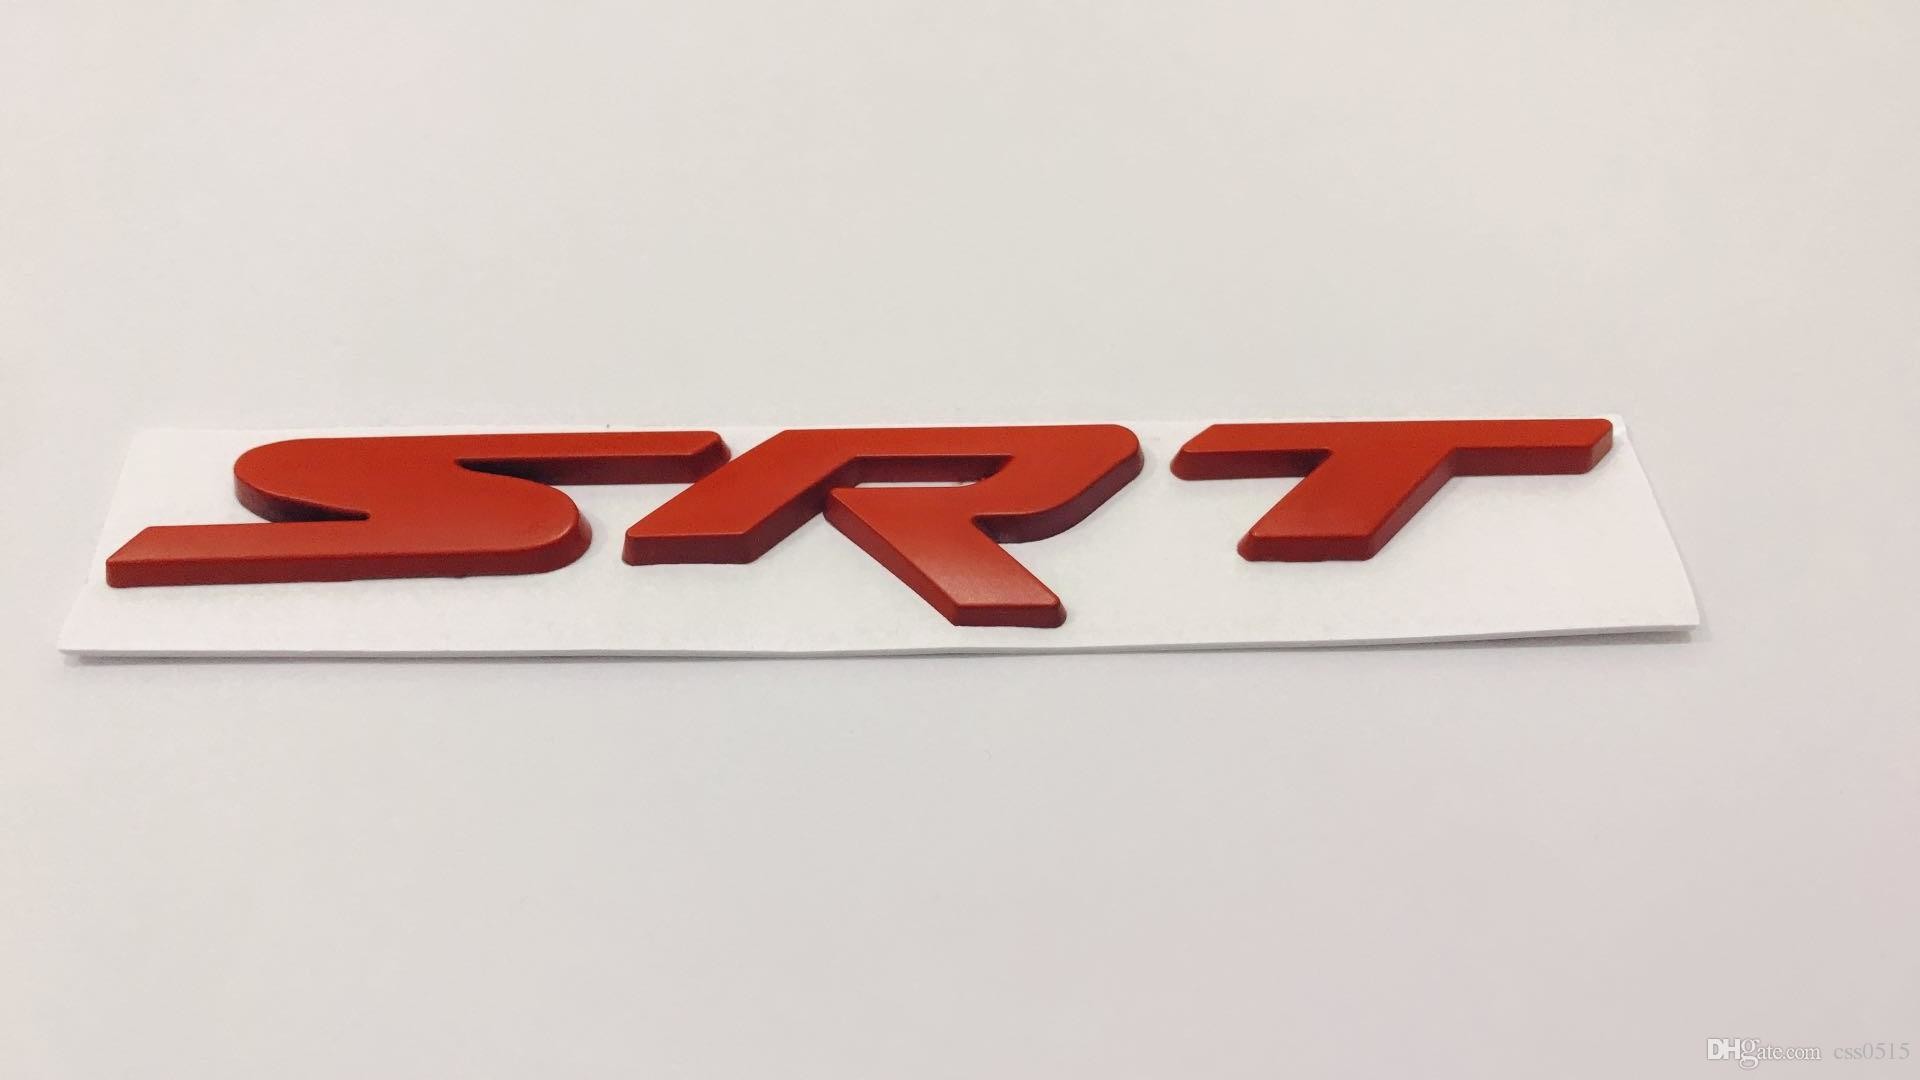 1920x1080 2019 3D Metal Red SRT Car Sticker Body Rear EMBLEM Fit Dodge Charger  Challenger SRT4 SRT6 SRT8 From Css0515, $3.52 | DHgate.Com